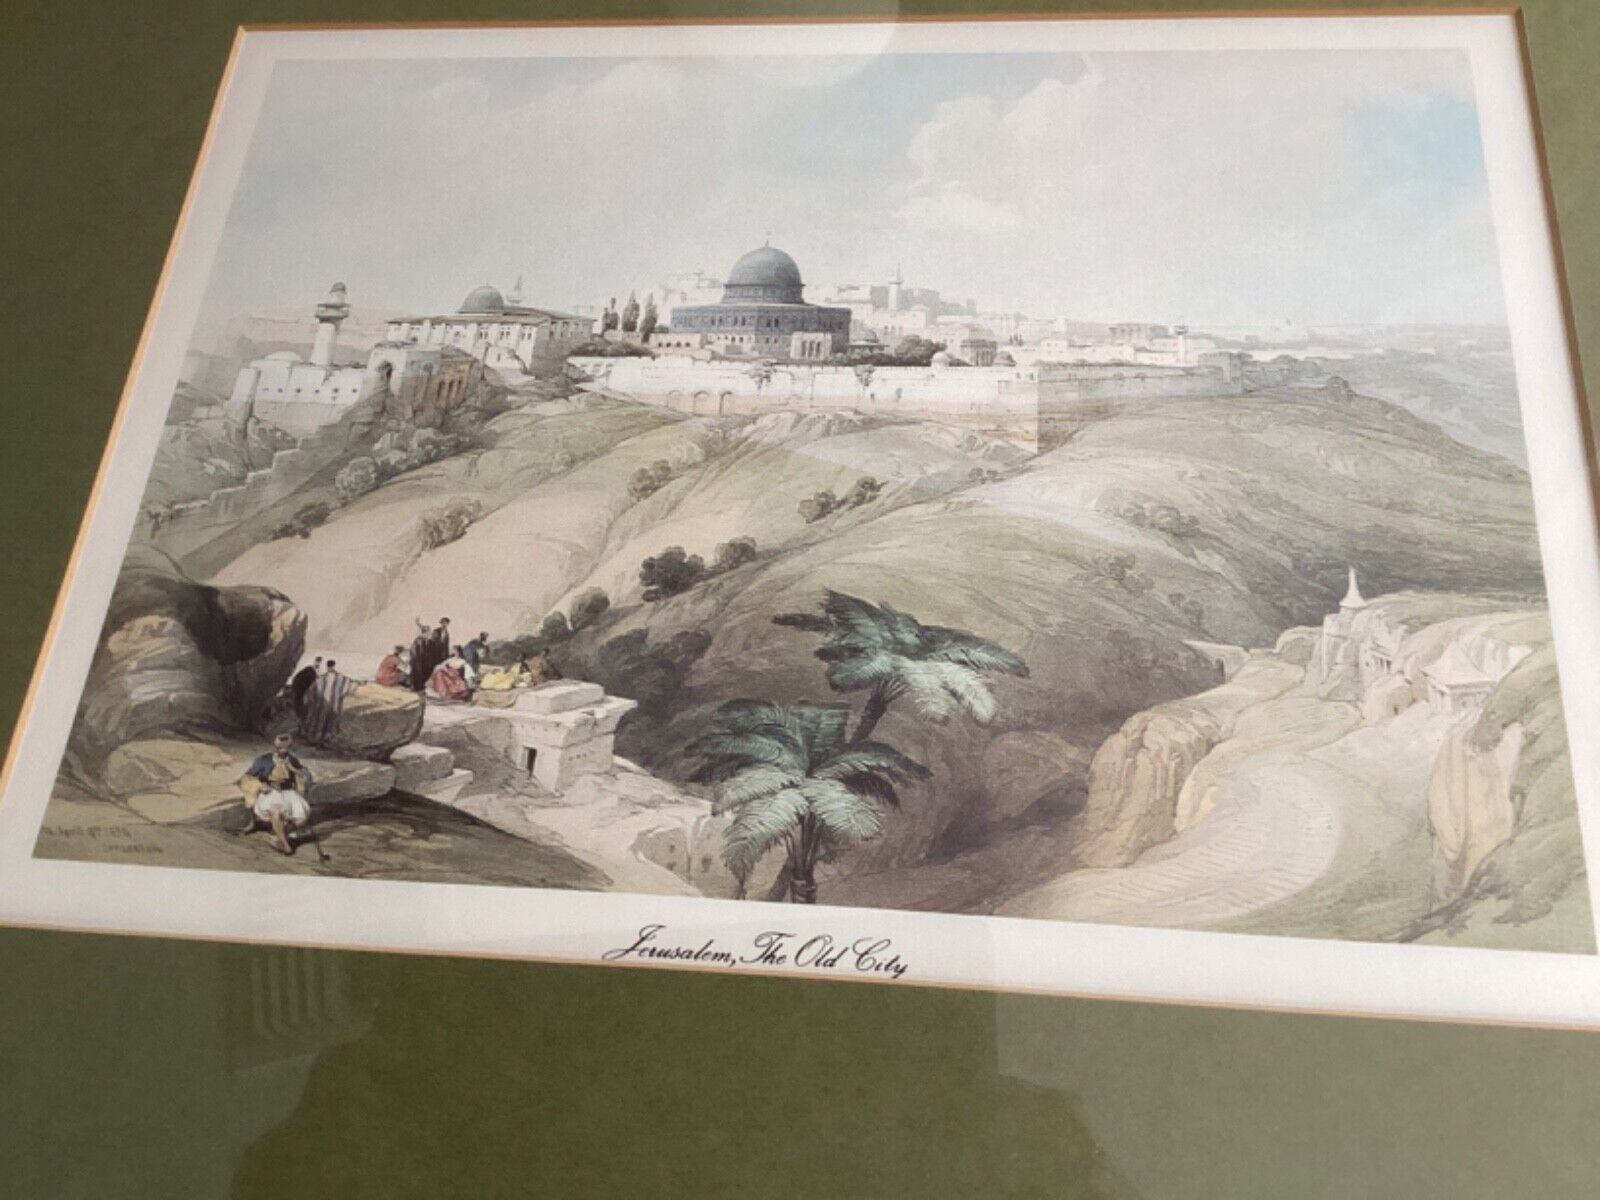 Apri 1839 Print of Old City Jerusalem 20.5”X17.5”Matted & framed